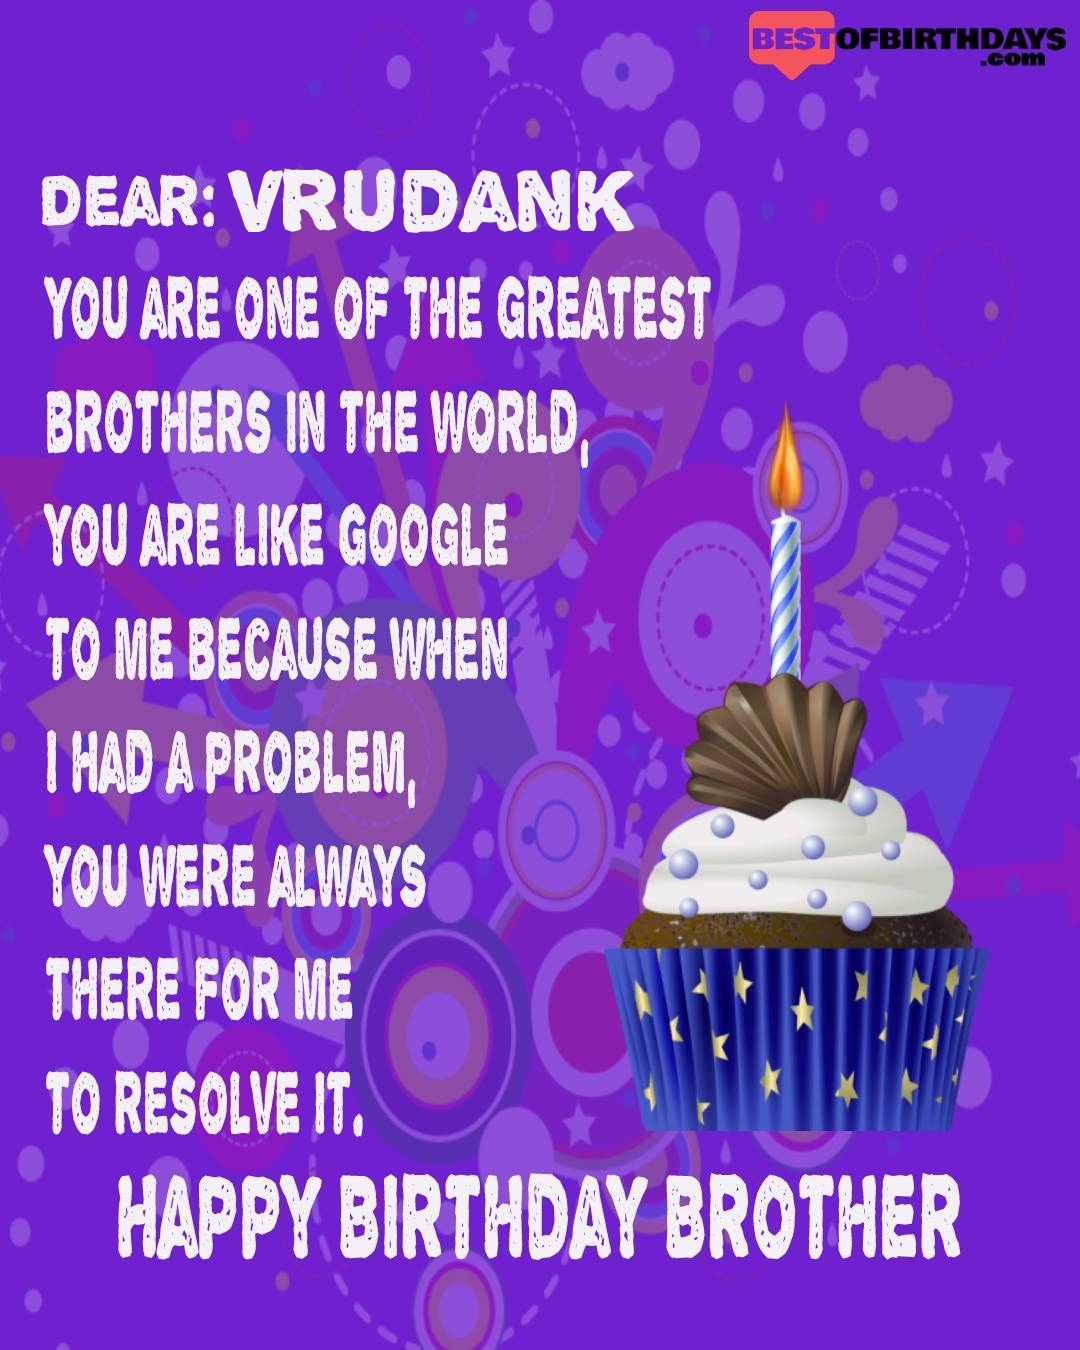 Happy birthday vrudank bhai brother bro